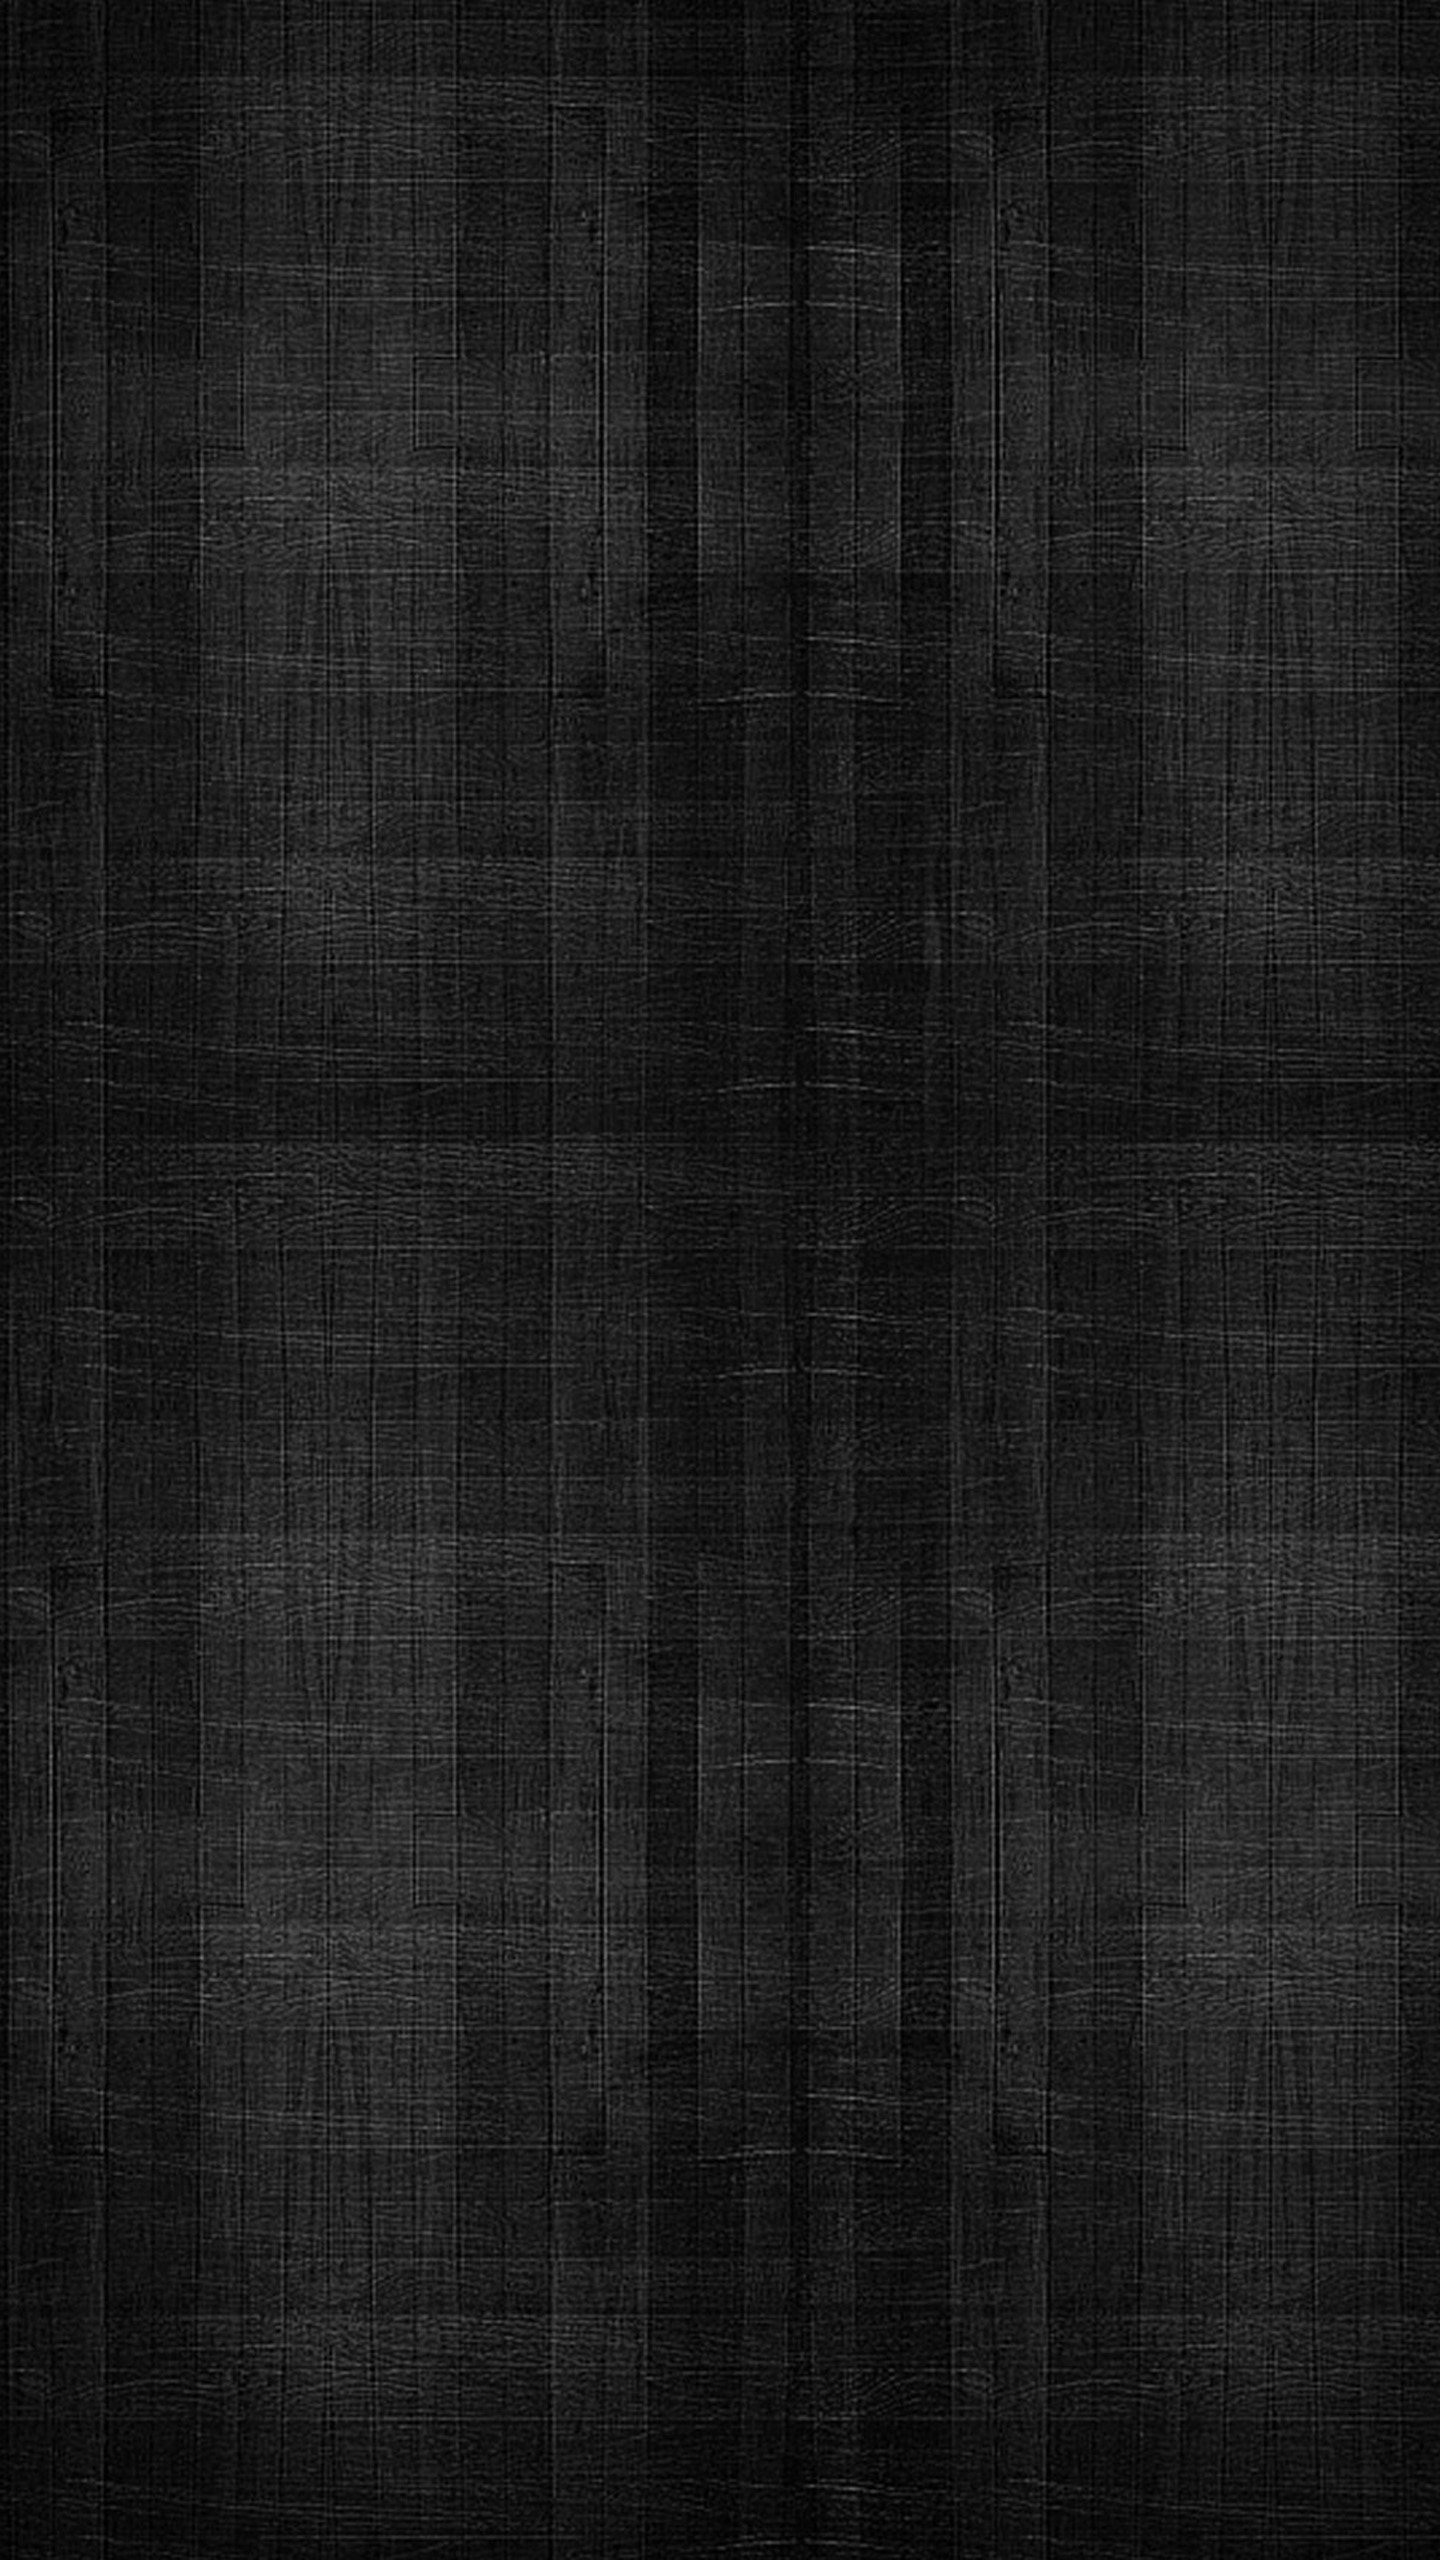 iPhone11paperscom  iPhone11 wallpaper   vu18metalcircleroundtexturepatterndarkgray